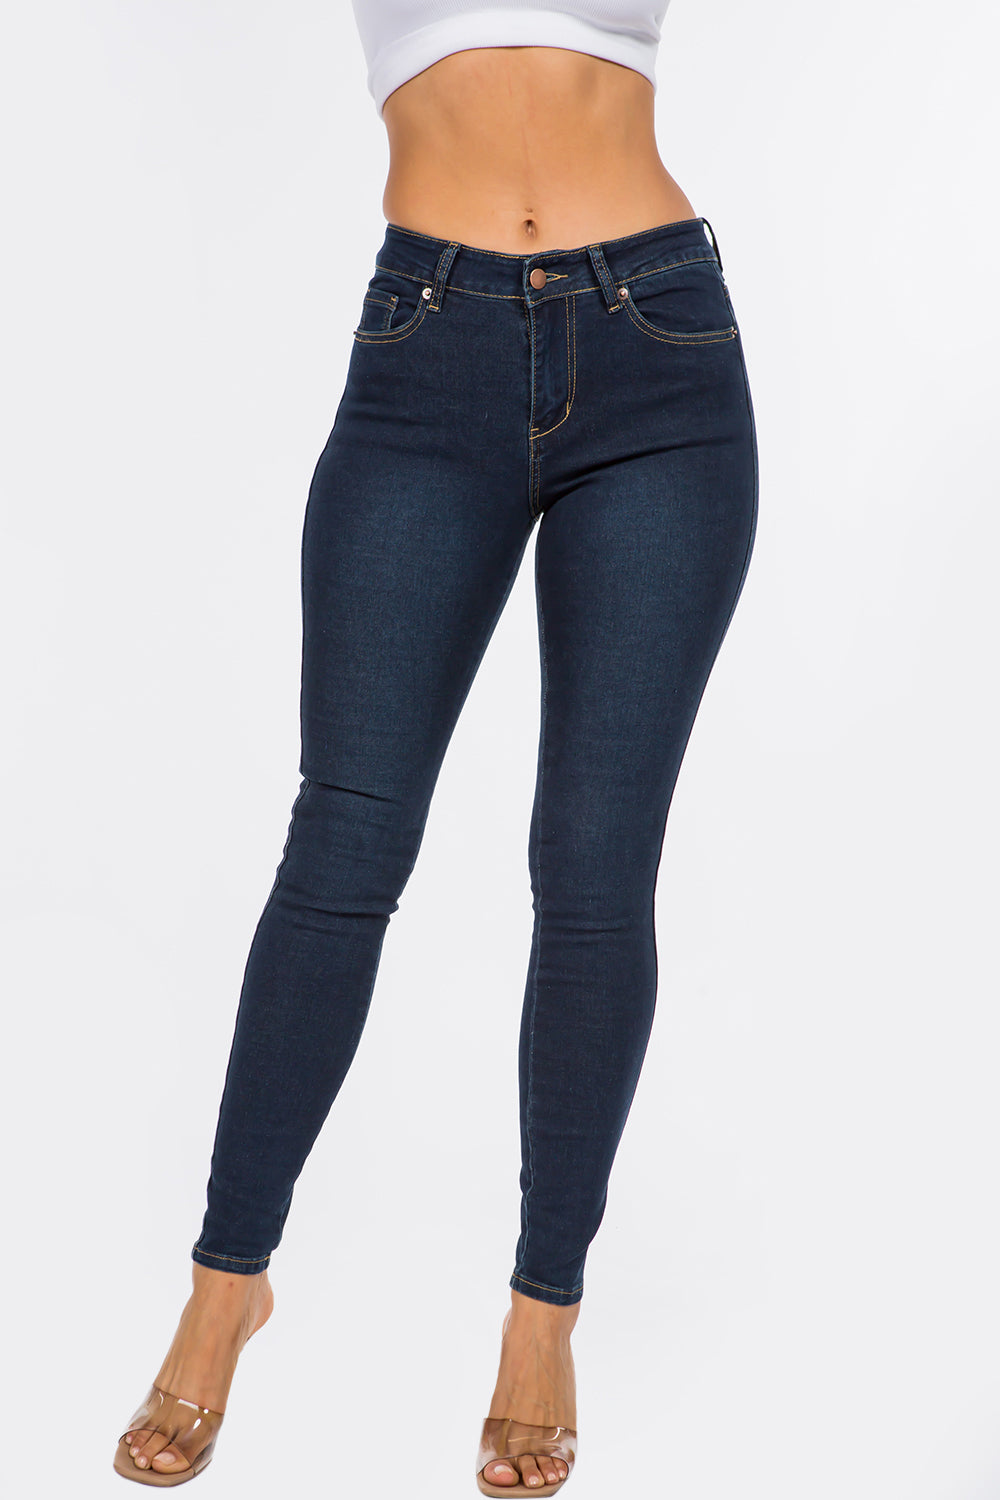 C&A Women's 5-Pocket Jeans Casual Straight Mid Rise / Mid Waist Cotton  Lycra® Stretch Denim, Denim Blue, 34W / 32L : : Fashion